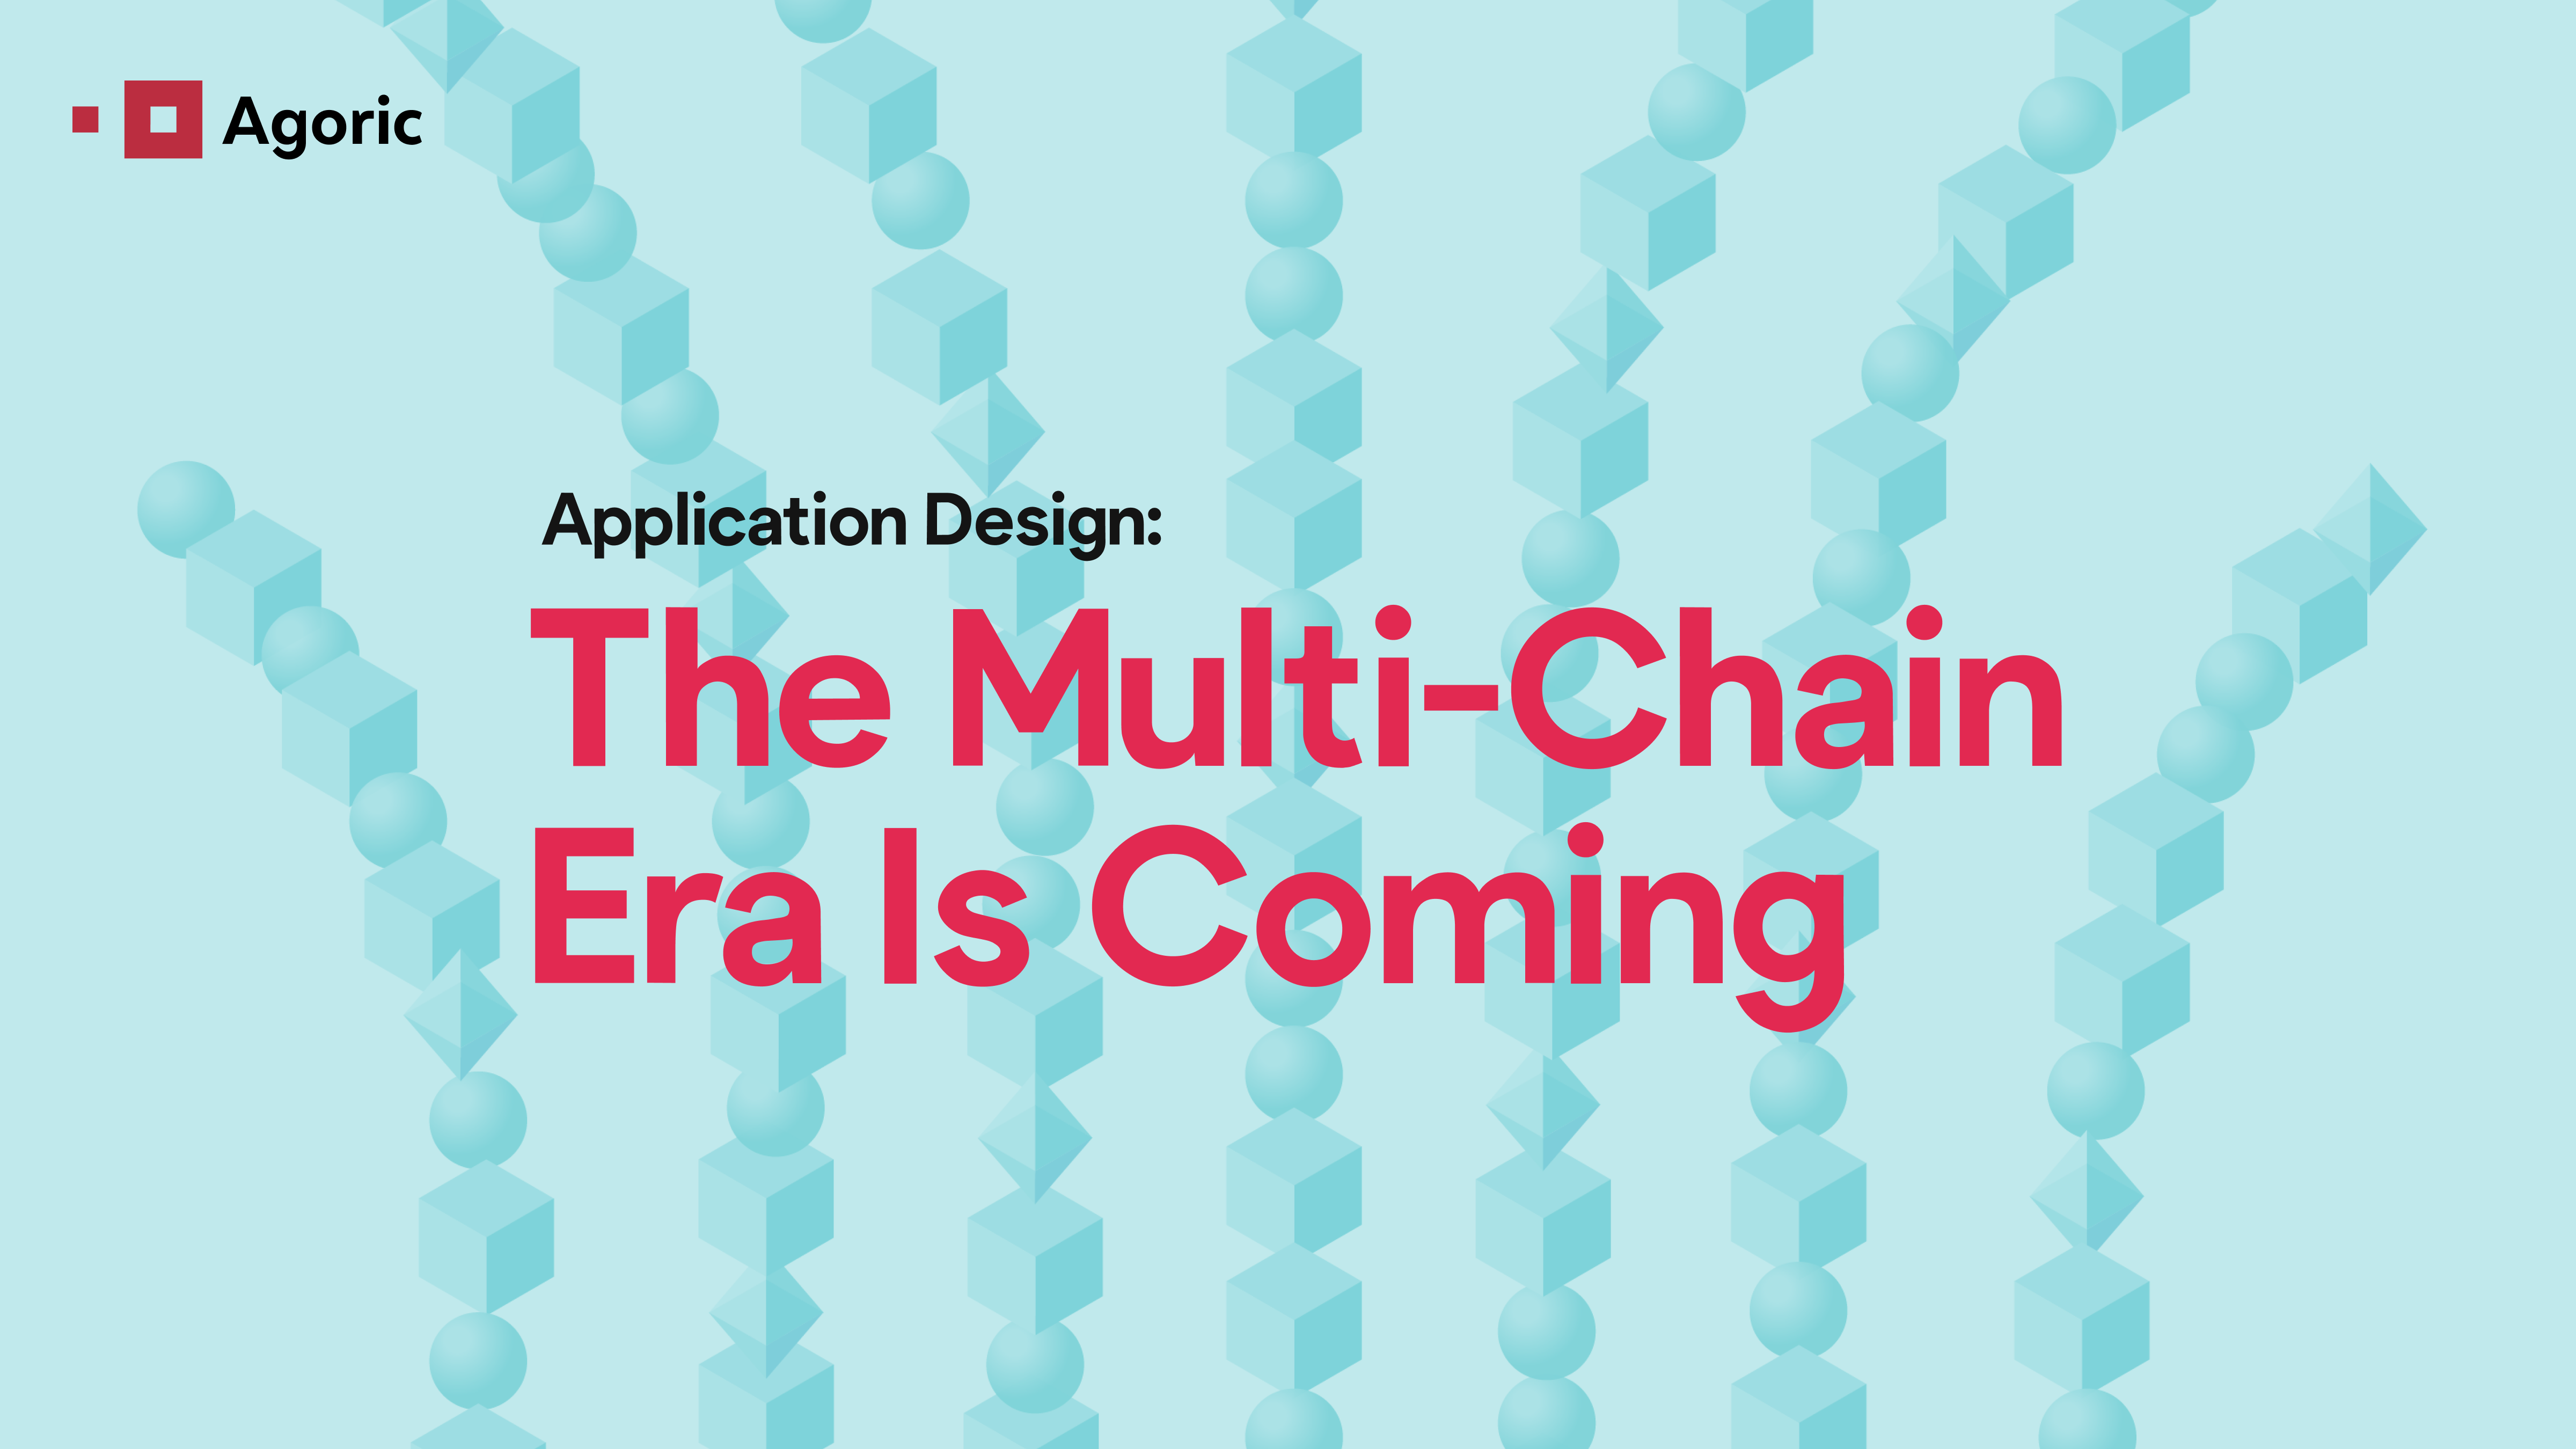 The Multi-Chain Era is Coming